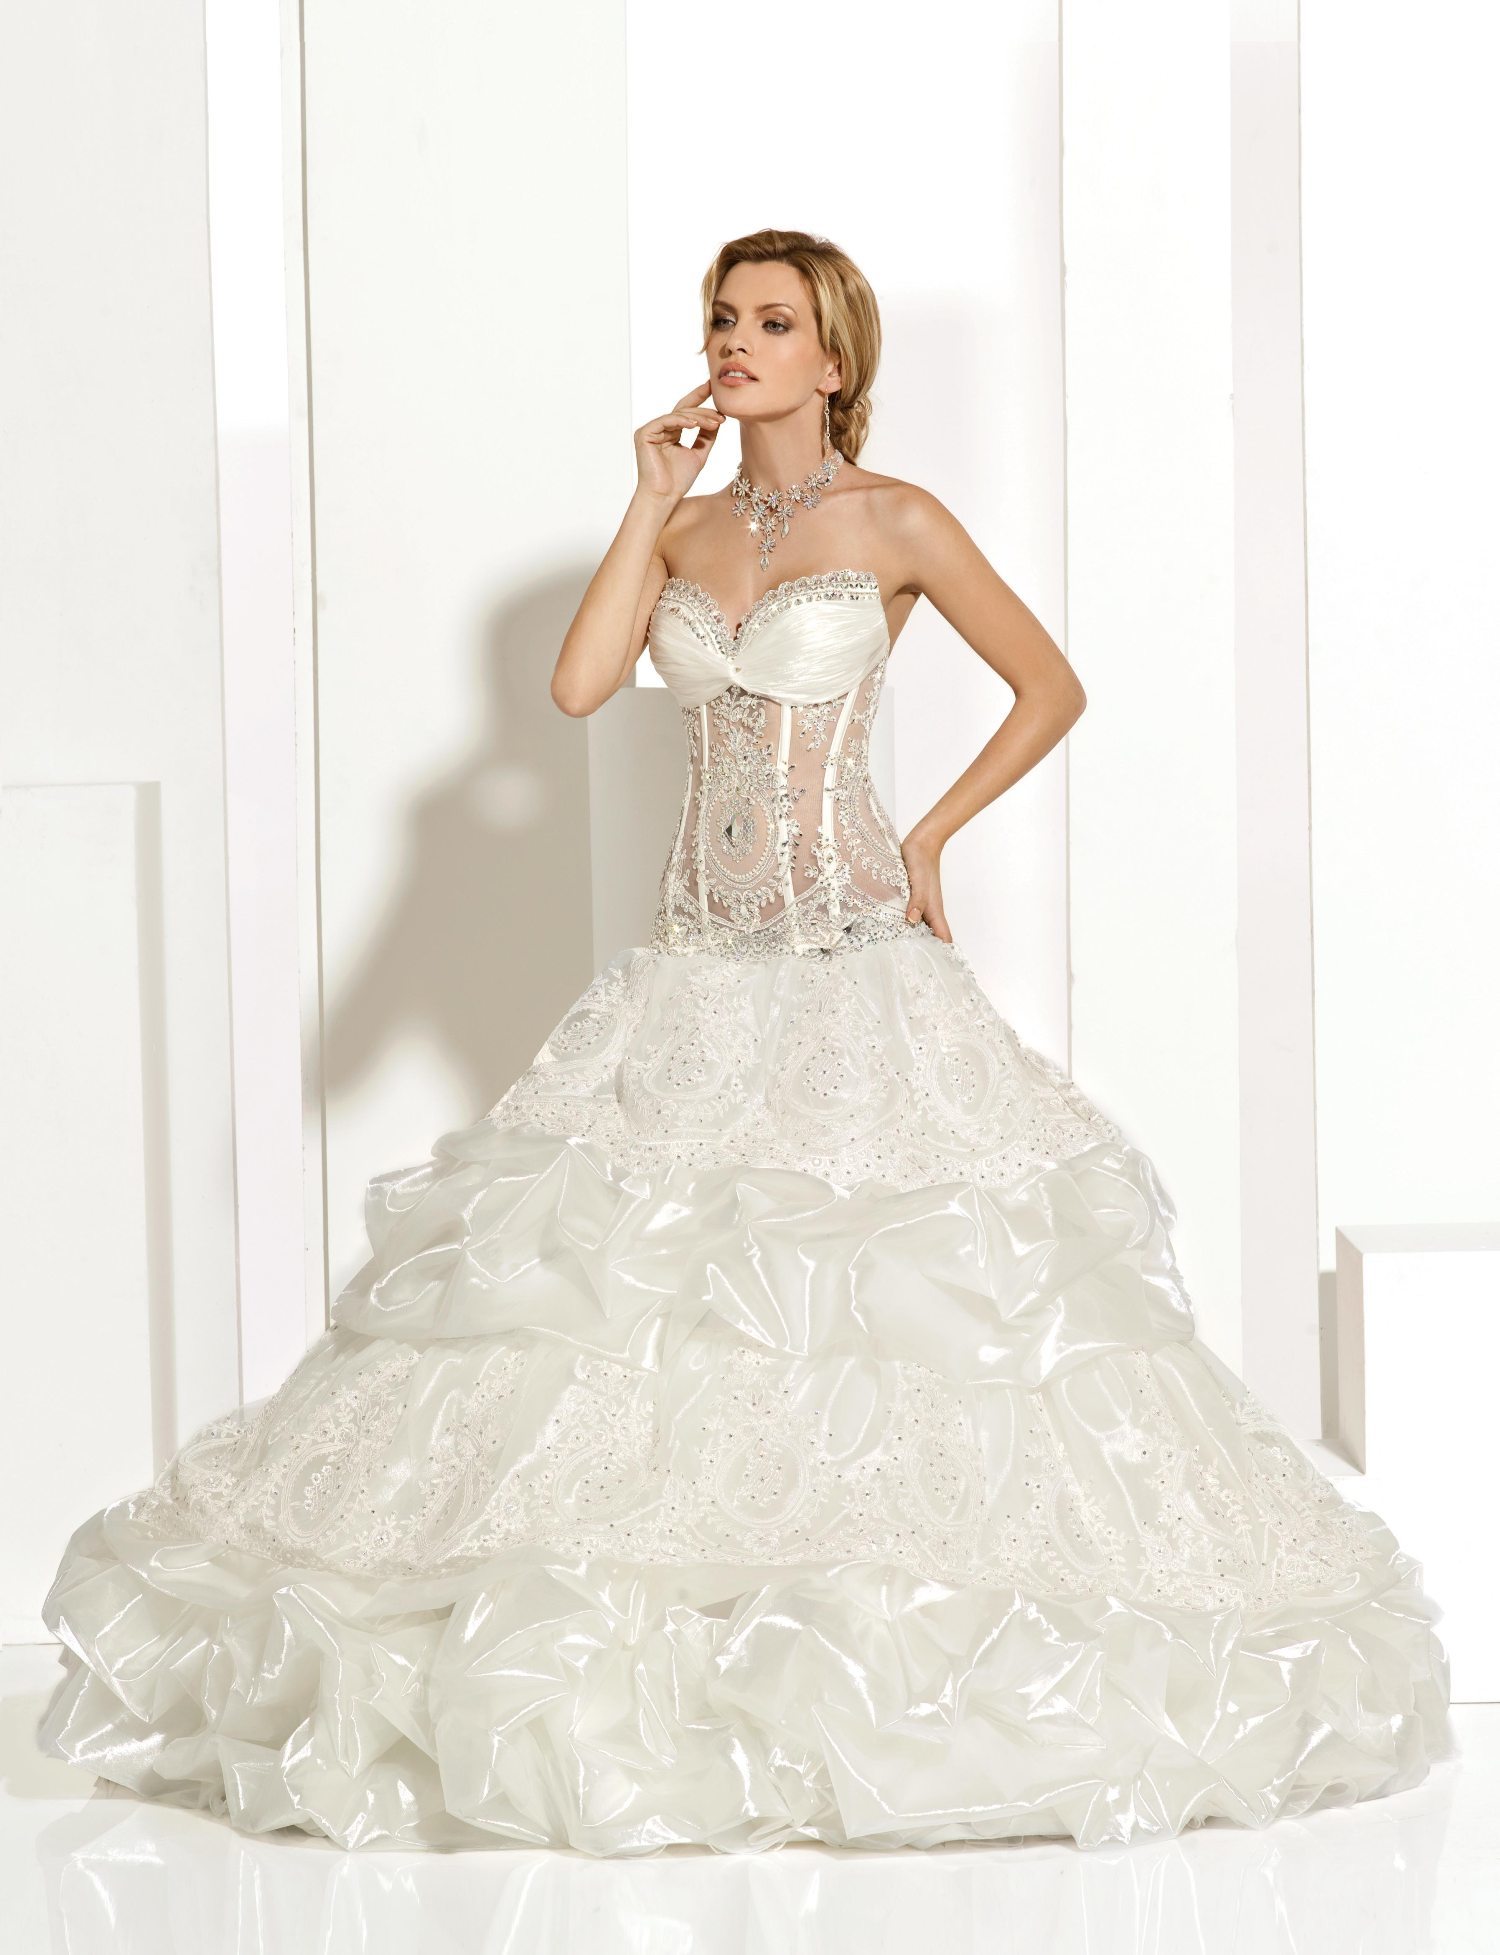 Wedding Dress - Lady Amber - Lady Ocianna Skirt - Lady Sabine Necklace | MyLady Bridal Gown